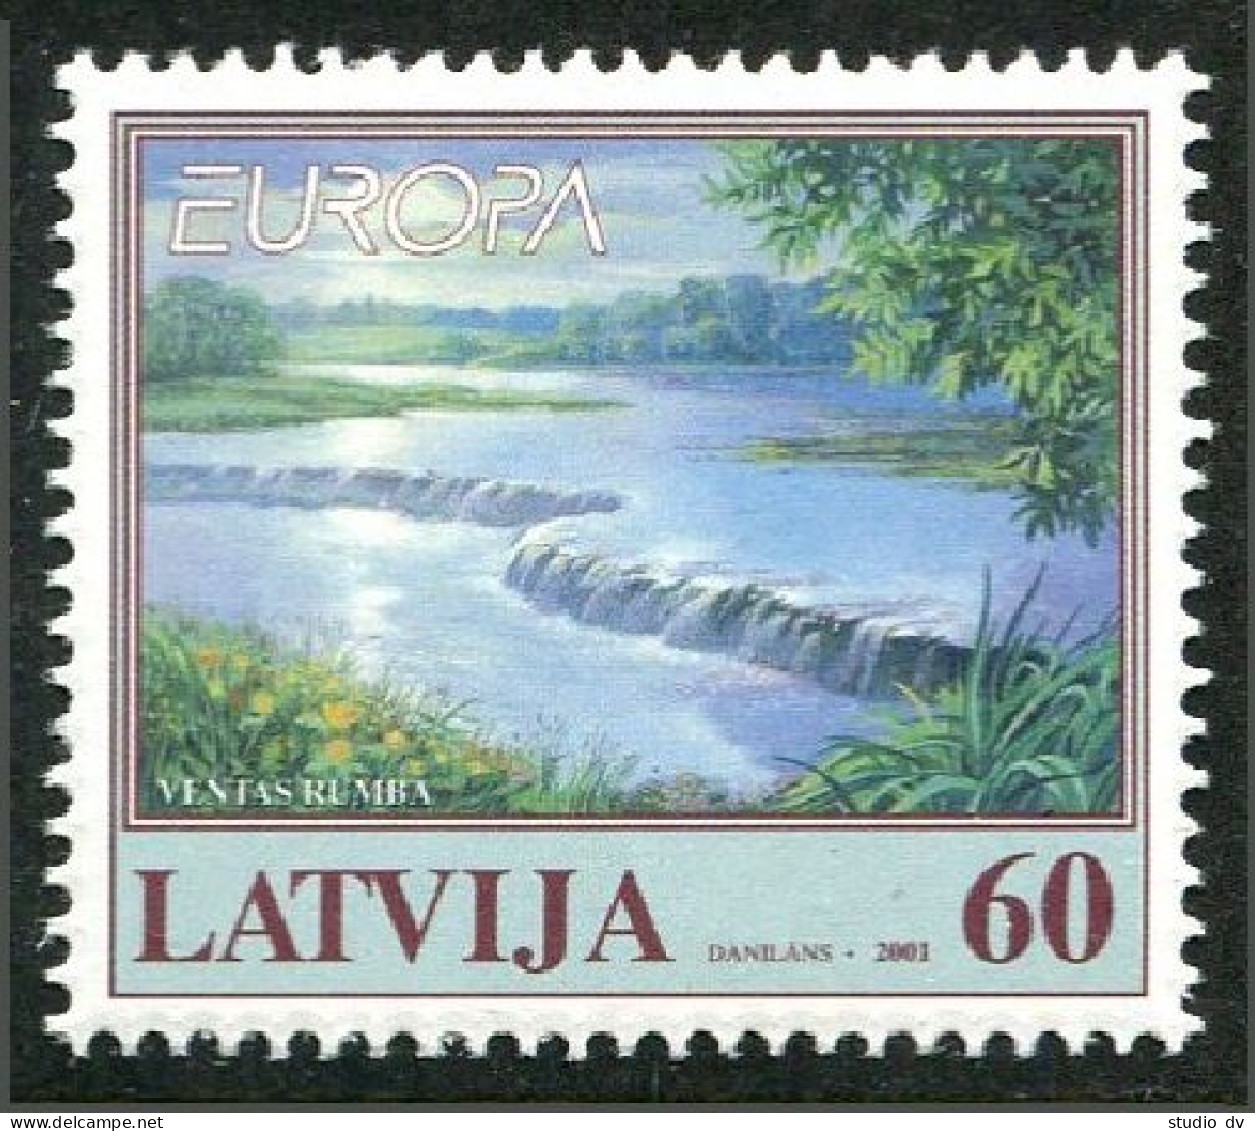 Latvia 528, MNH. Michel 544. EUROPA CEPT-2001. Lake. - Lettonia